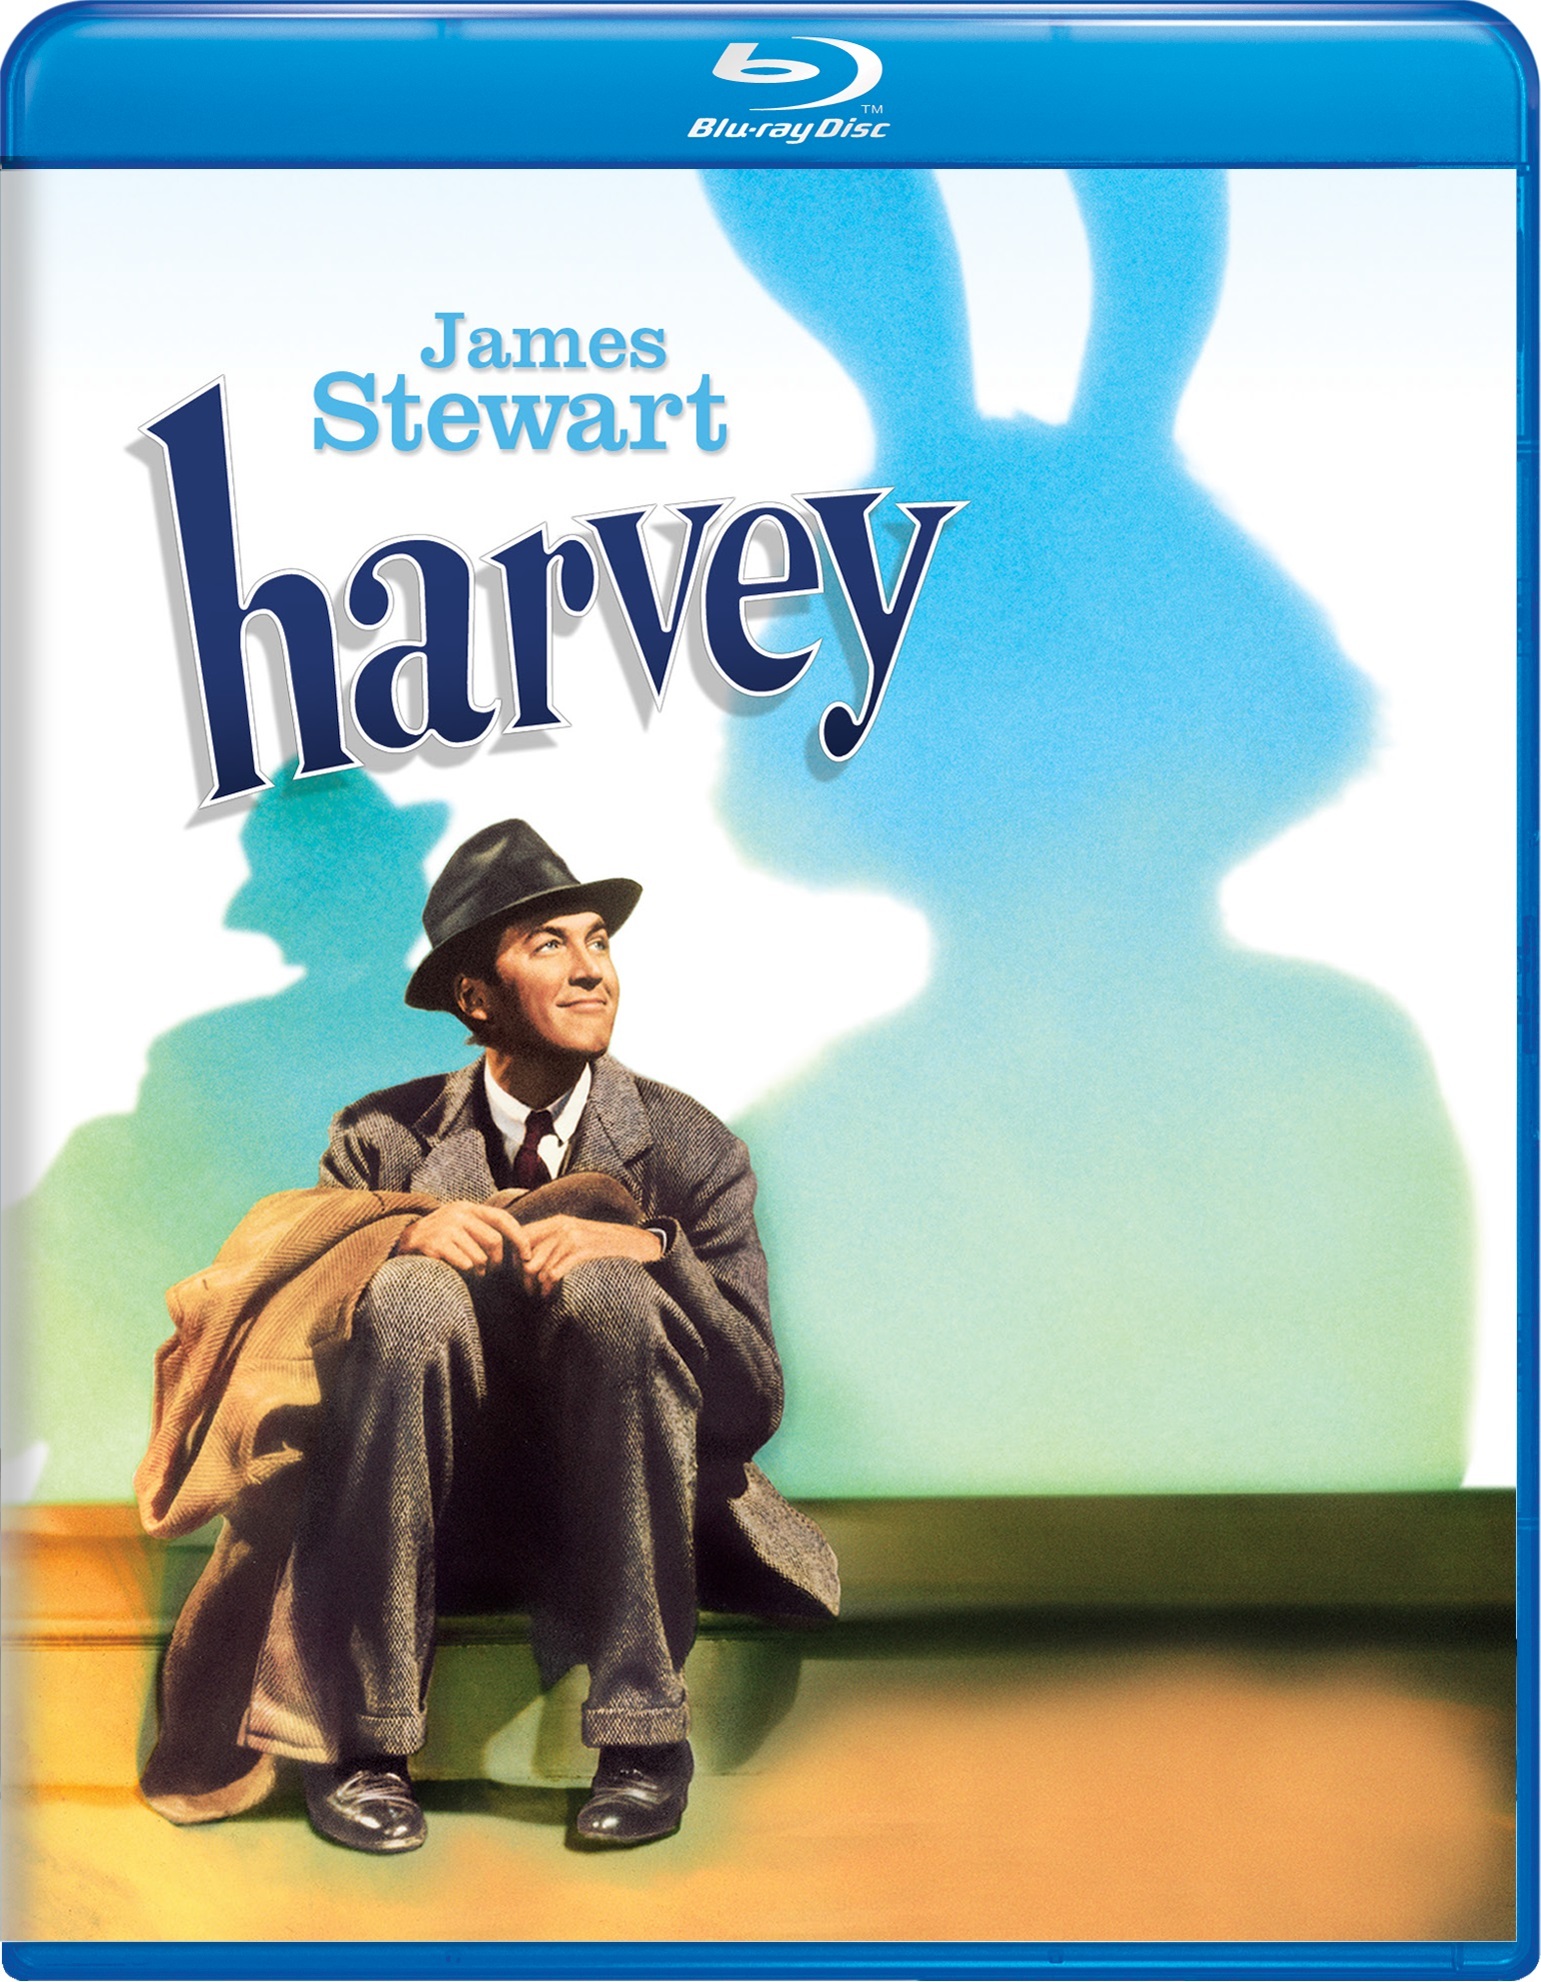 Harvey - Blu-ray [ 1950 ]  - Classic Movies On Blu-ray - Movies On GRUV